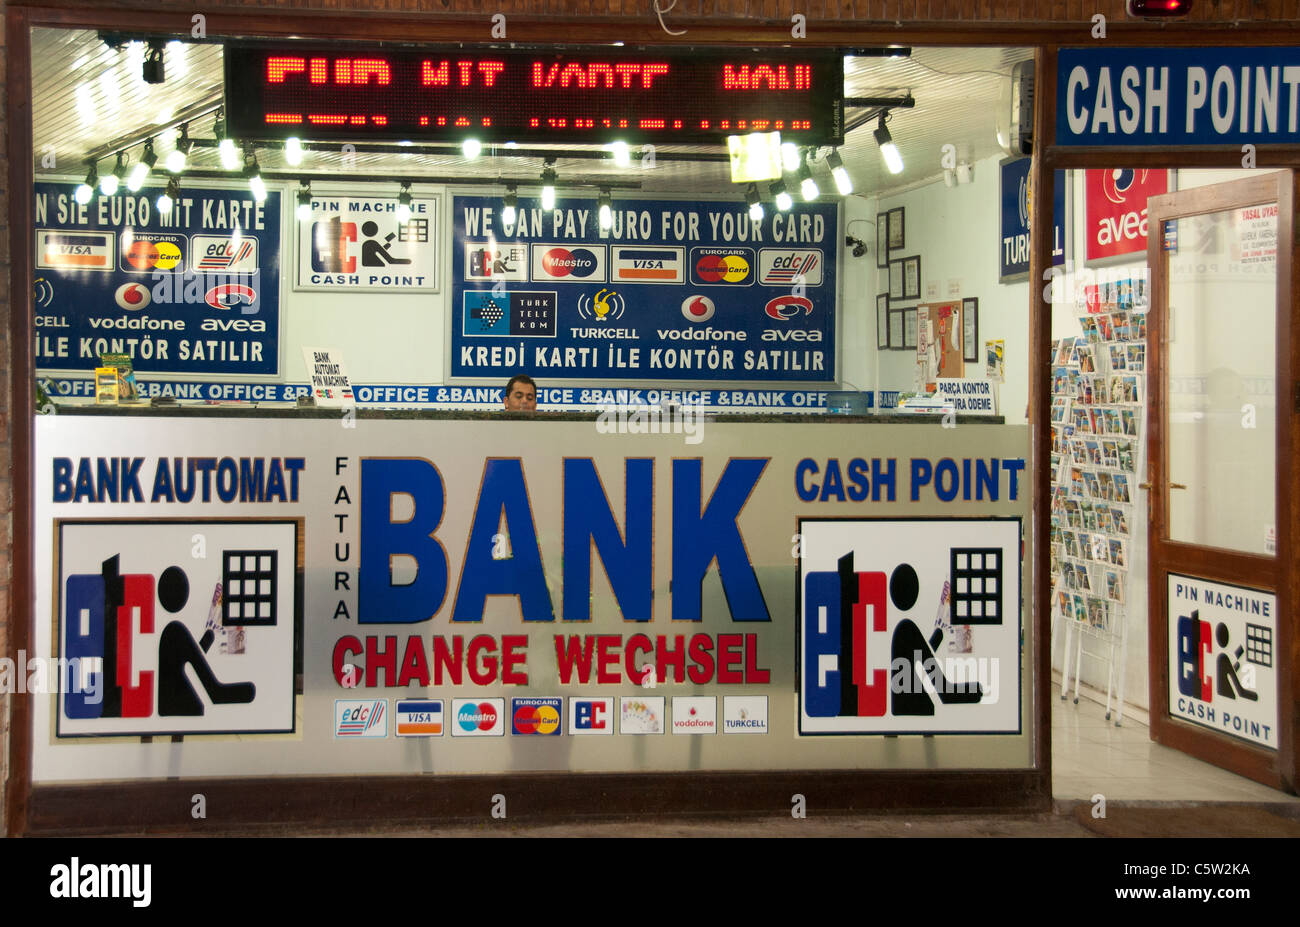 Side Town City Turkey Bank Monet Change Cash Point Banking Stock Photo